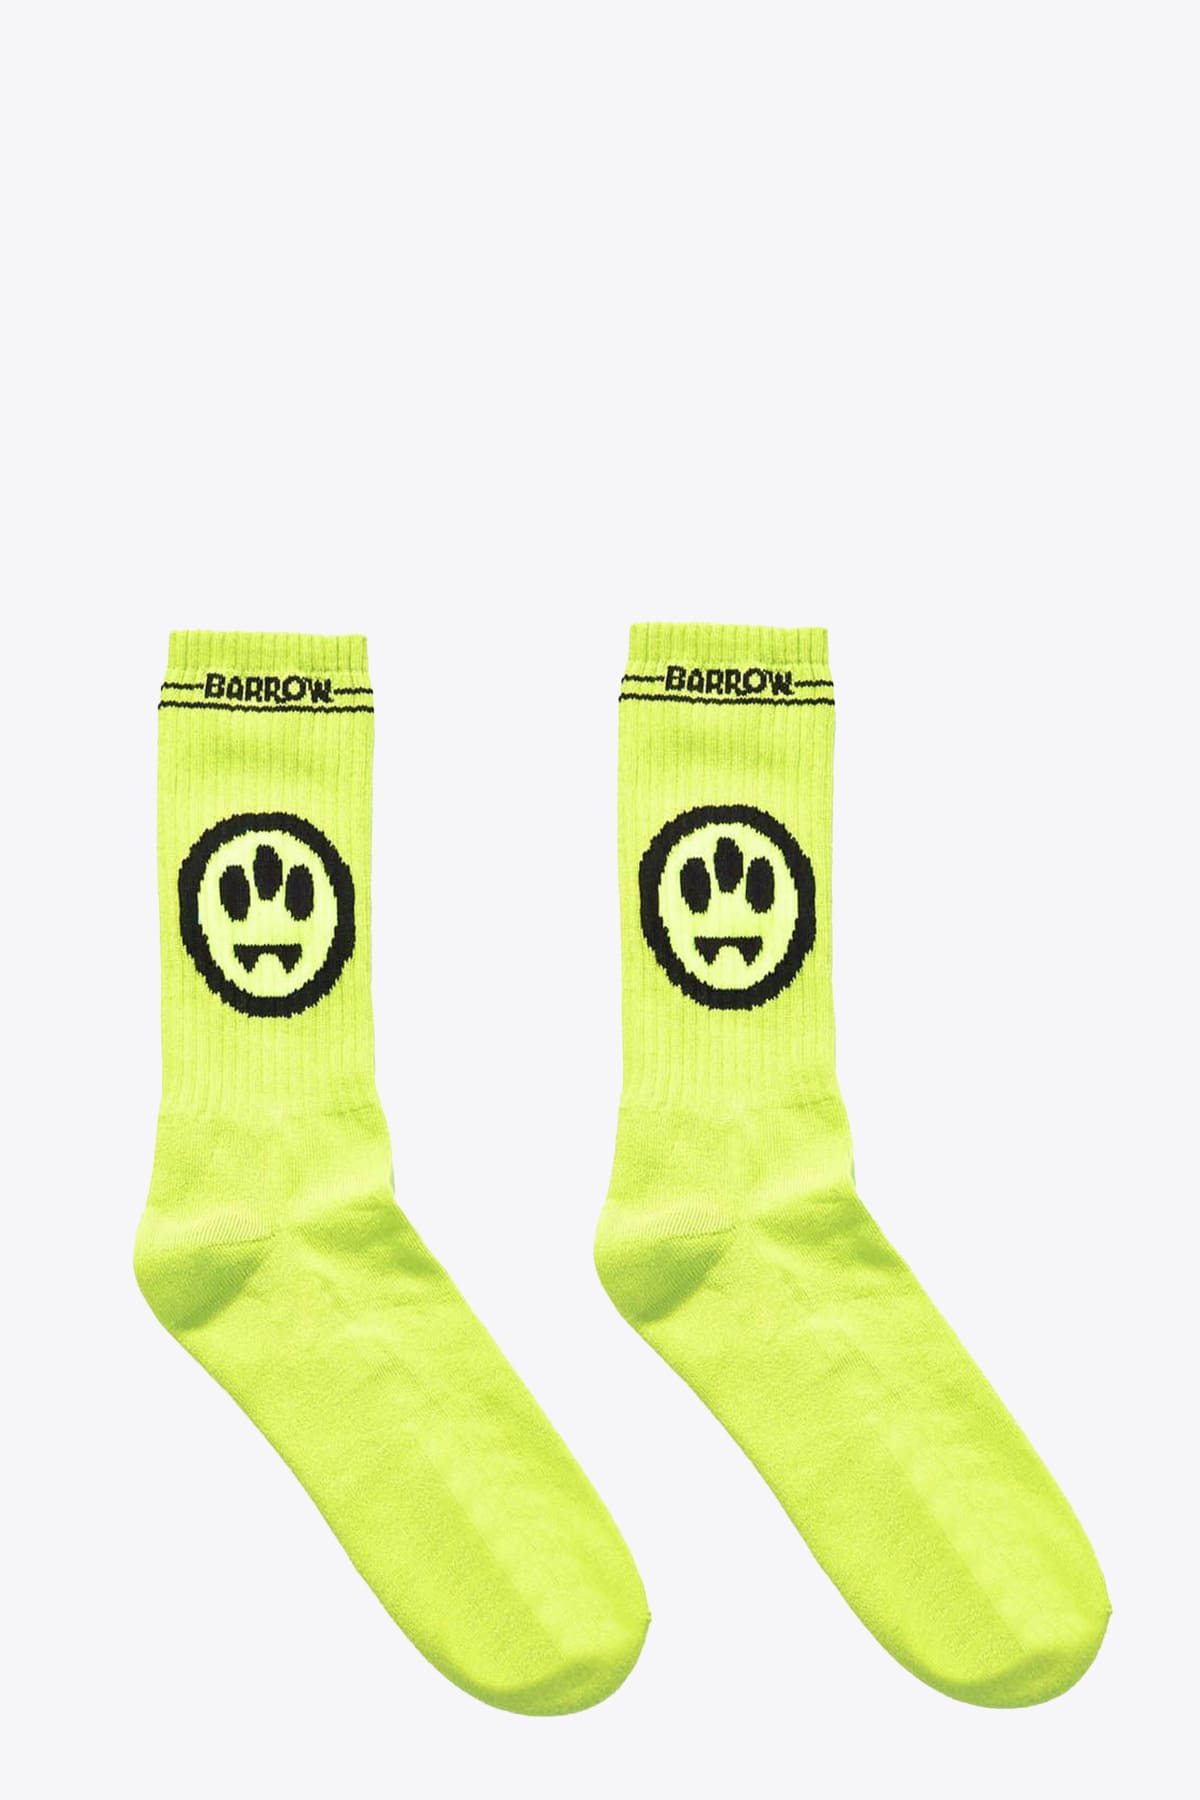 Barrow Socks Neon yellow ribbed cotton socks with smile